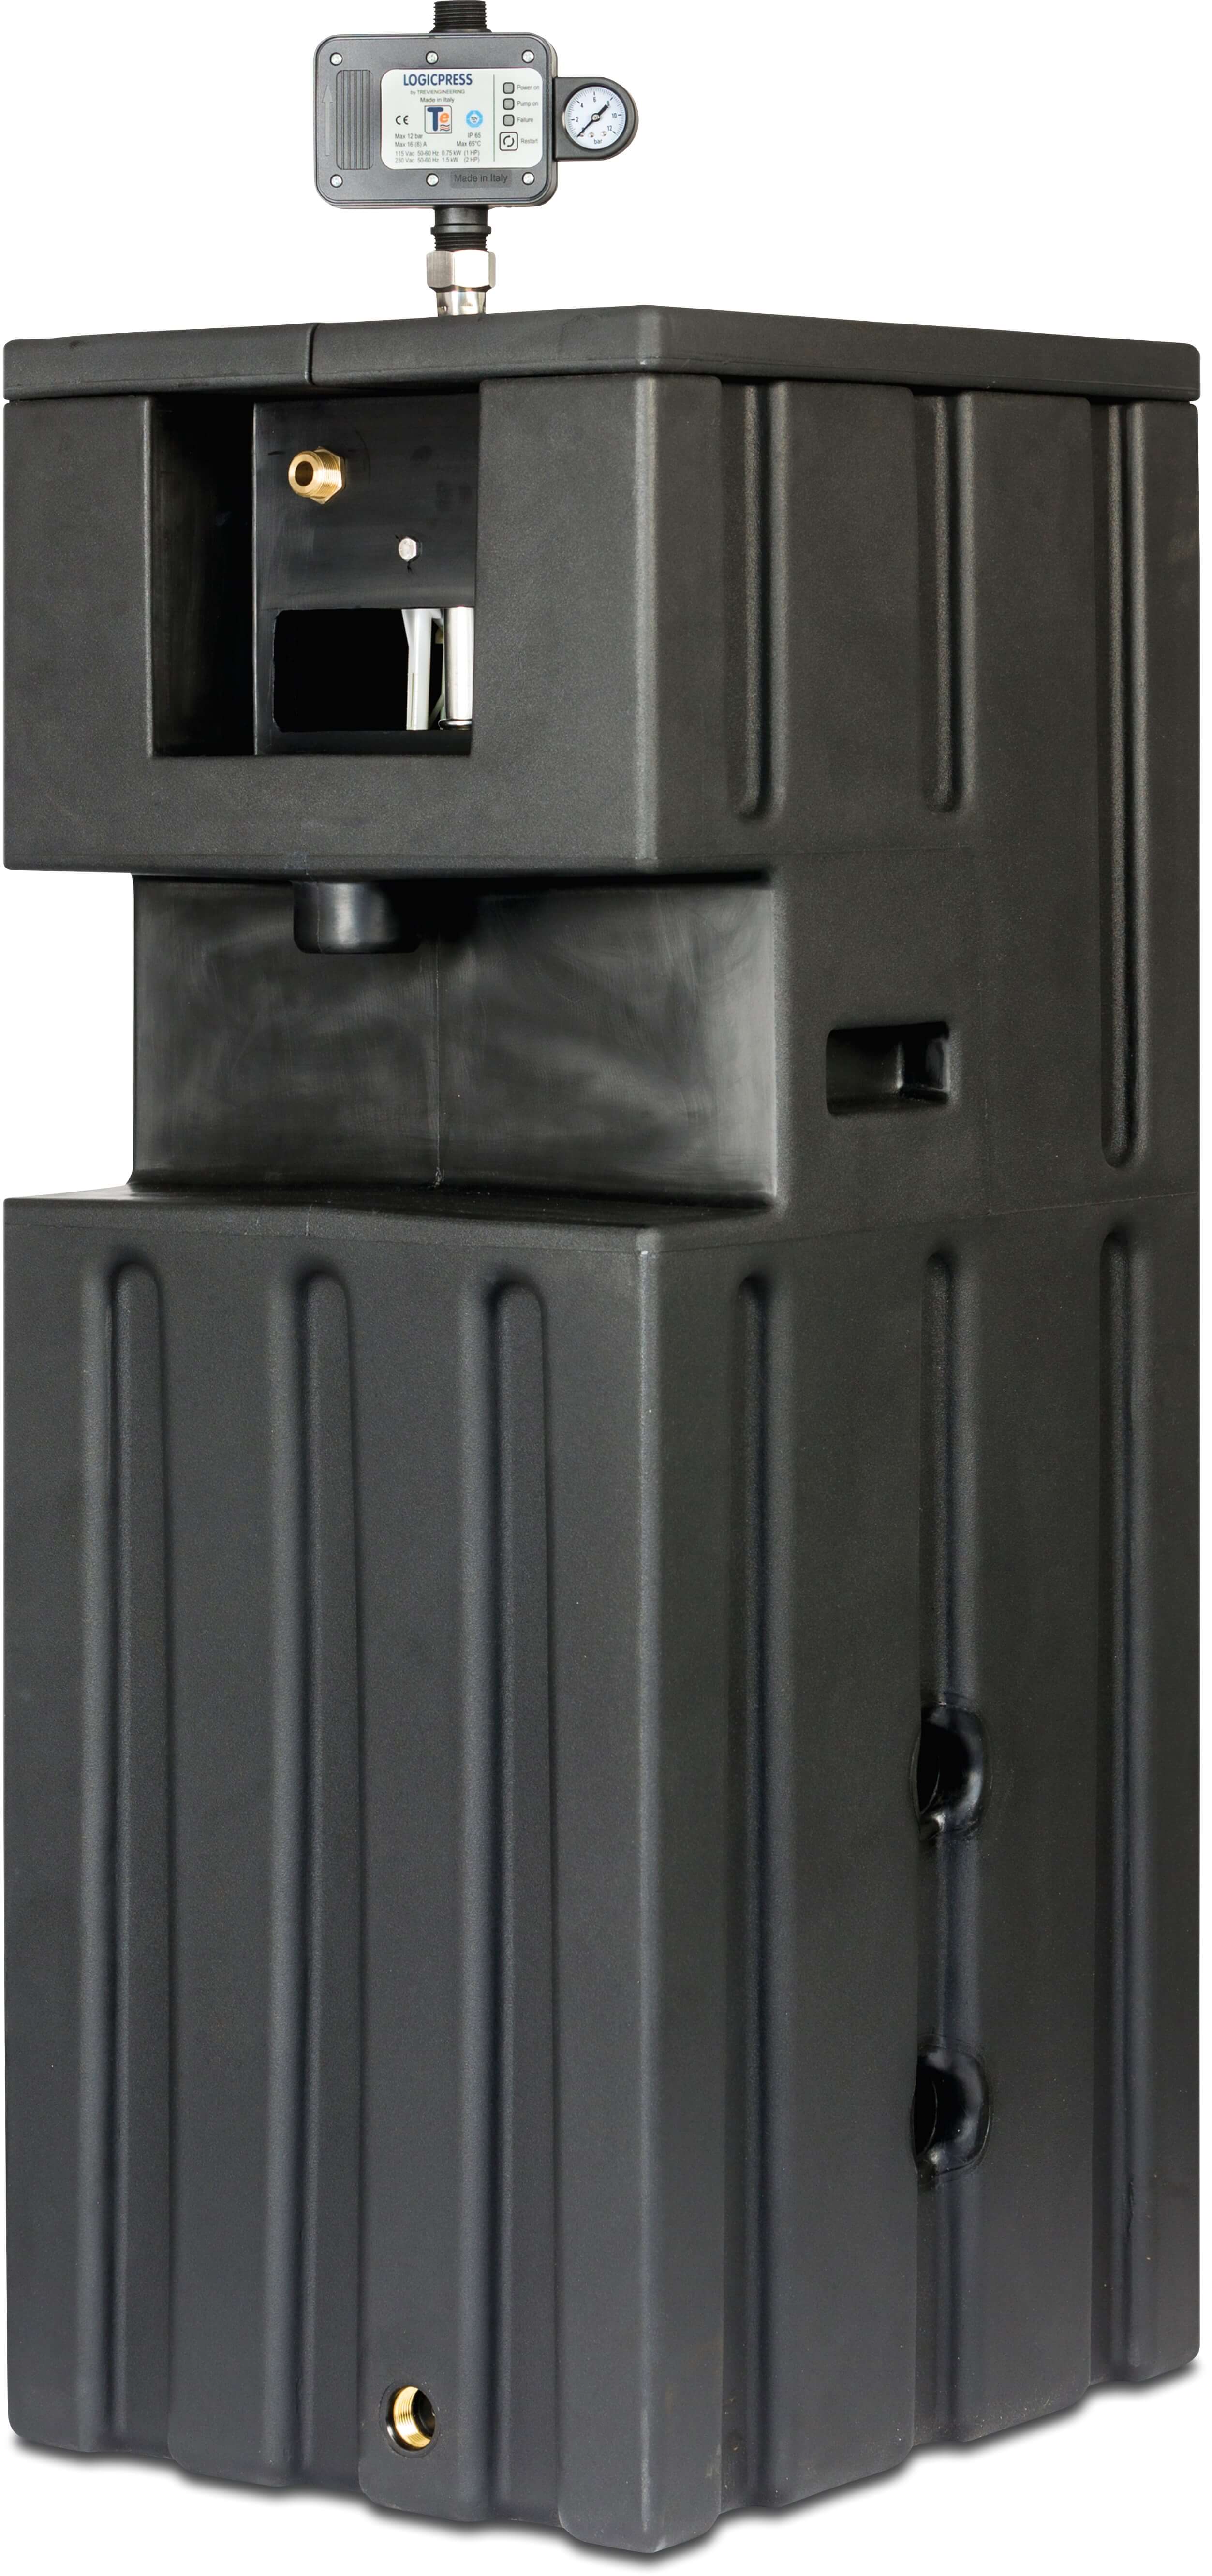 Trykforøgeranlæg 3/4" x 1" udvendig gevind 230VAC BELGAQUA type Combi DSCT med Minisub & Logicpres Set